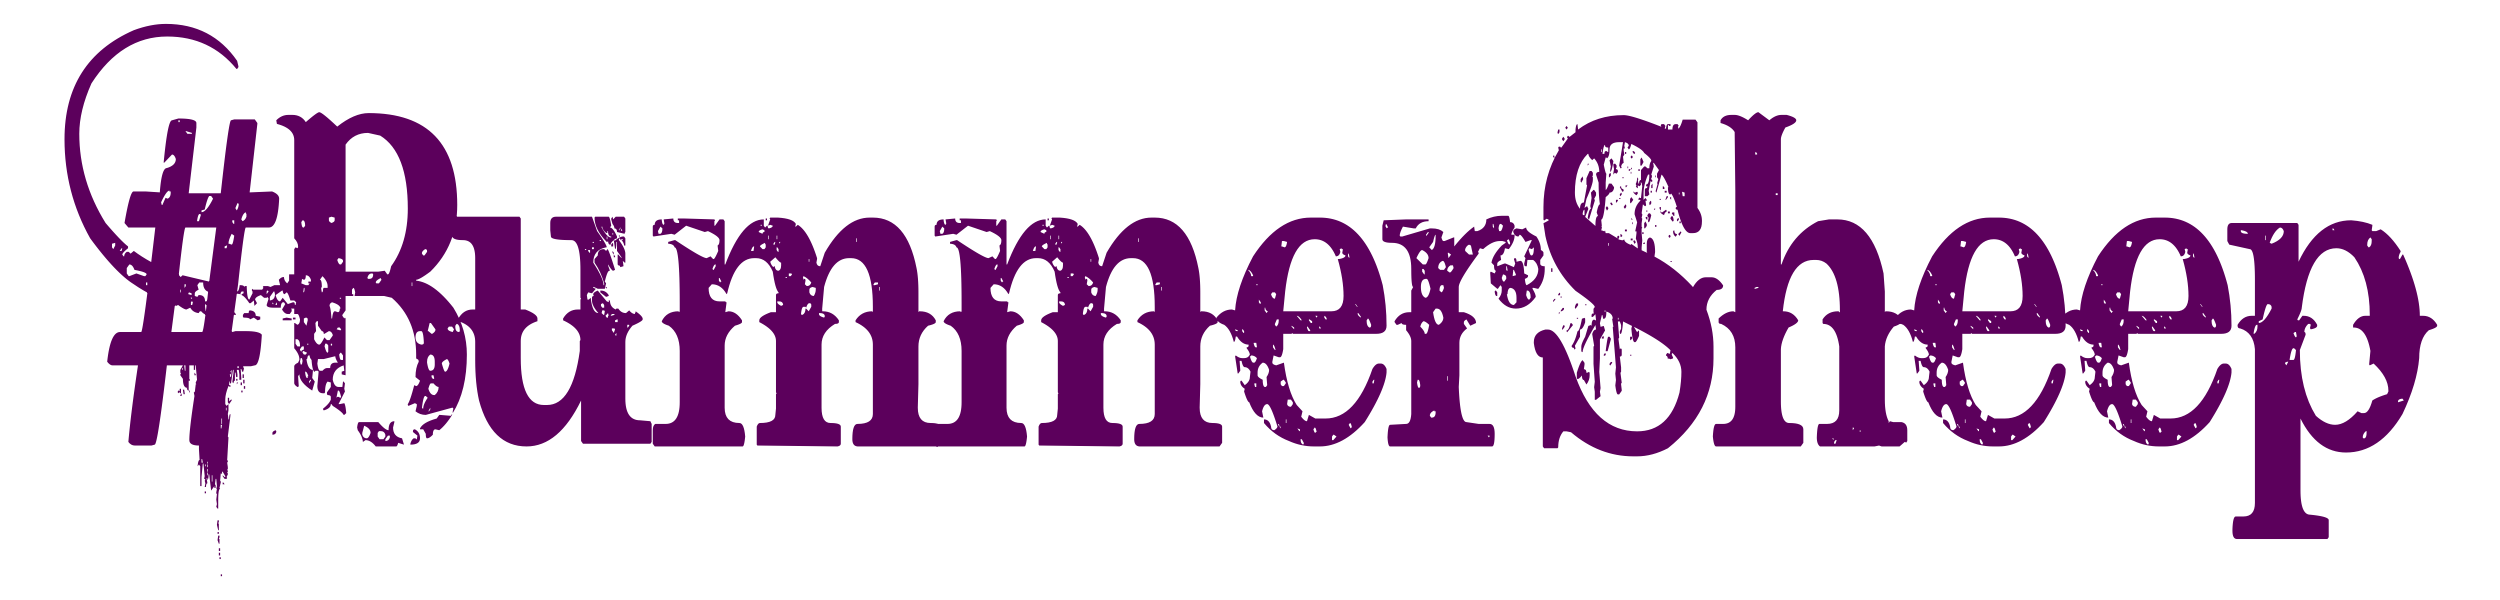 BummerSheep logo